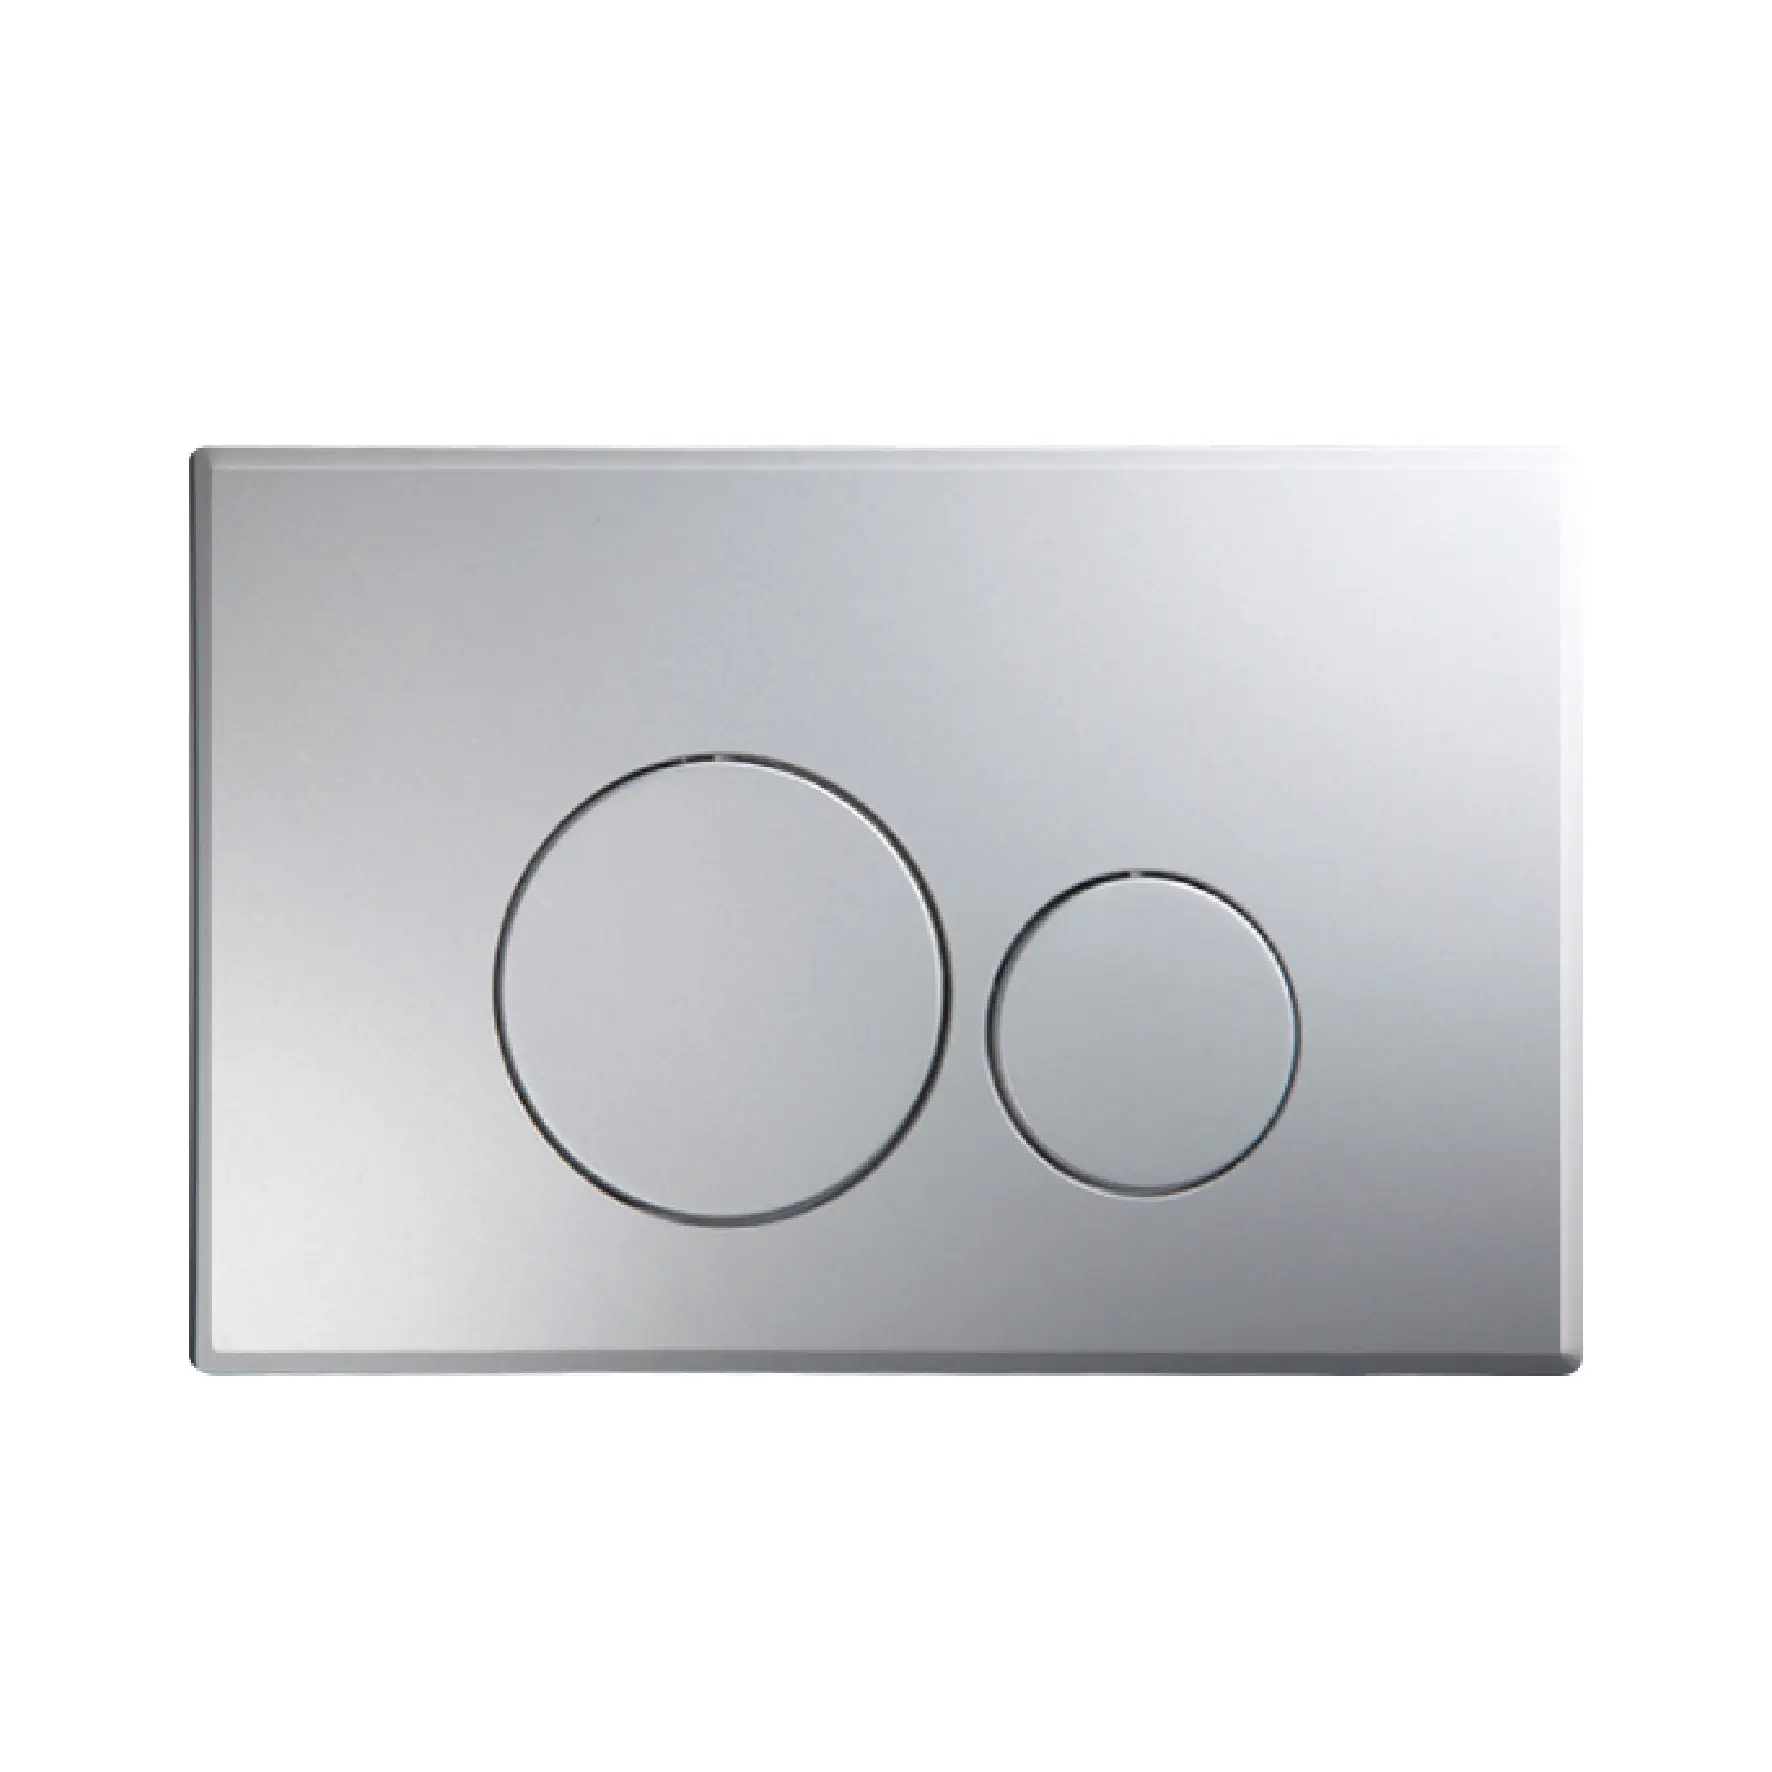 F5020 ARS ASA chrome Spraying silver Dual Flush Panel toilet flush tank plate dual button trial buttons